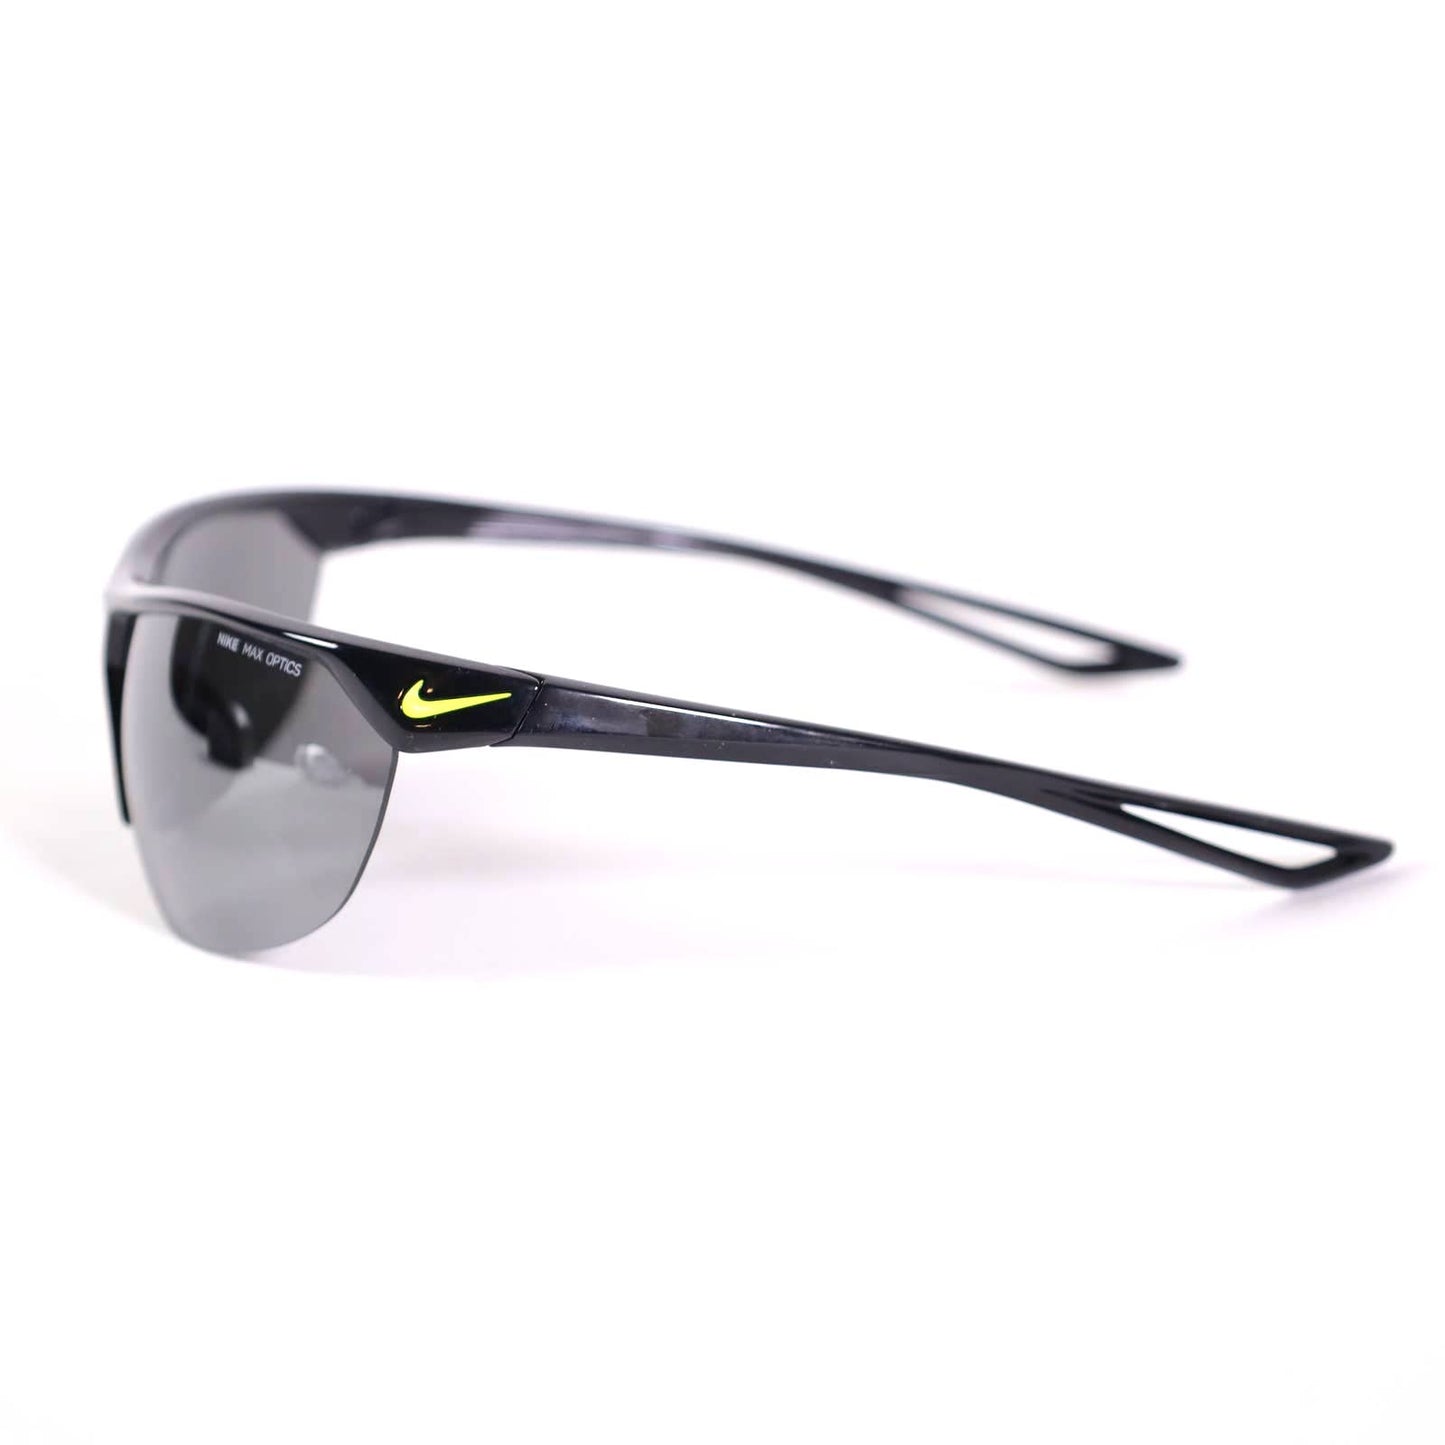 Nike Mens Cross Trainer With Max Optics Sunglasses - Black/Grey Mirror